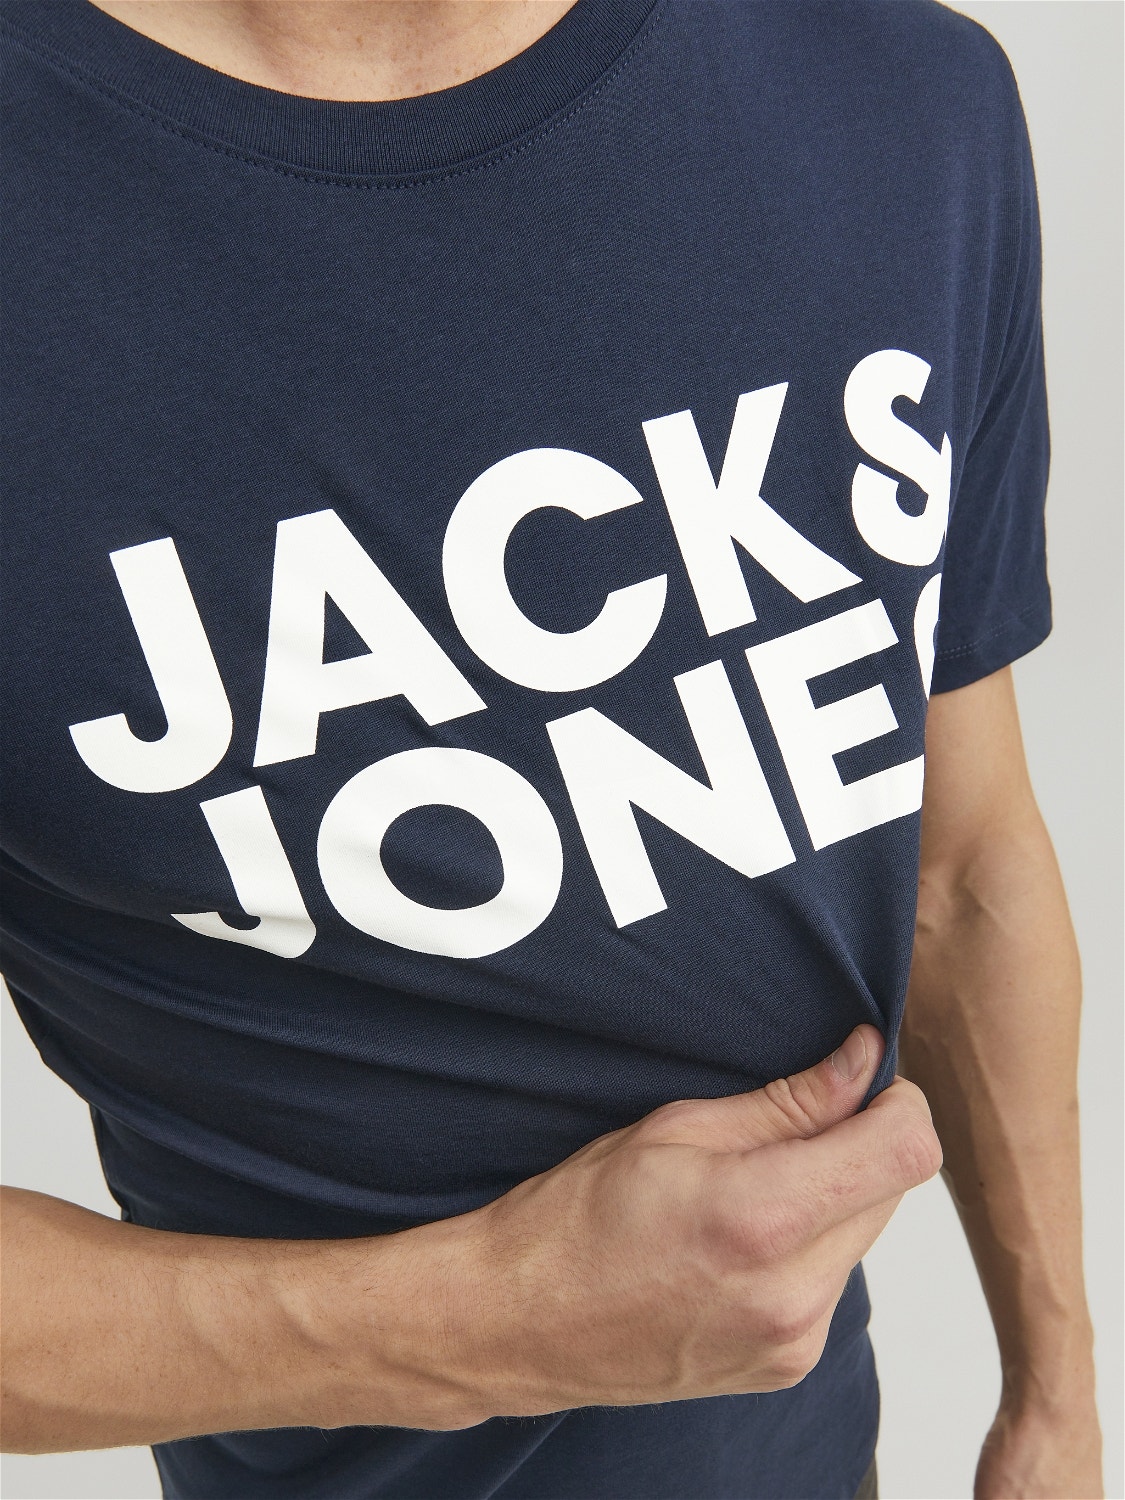 Jack & Jones Logo Crew neck T-shirt -Navy Blazer - 12151955